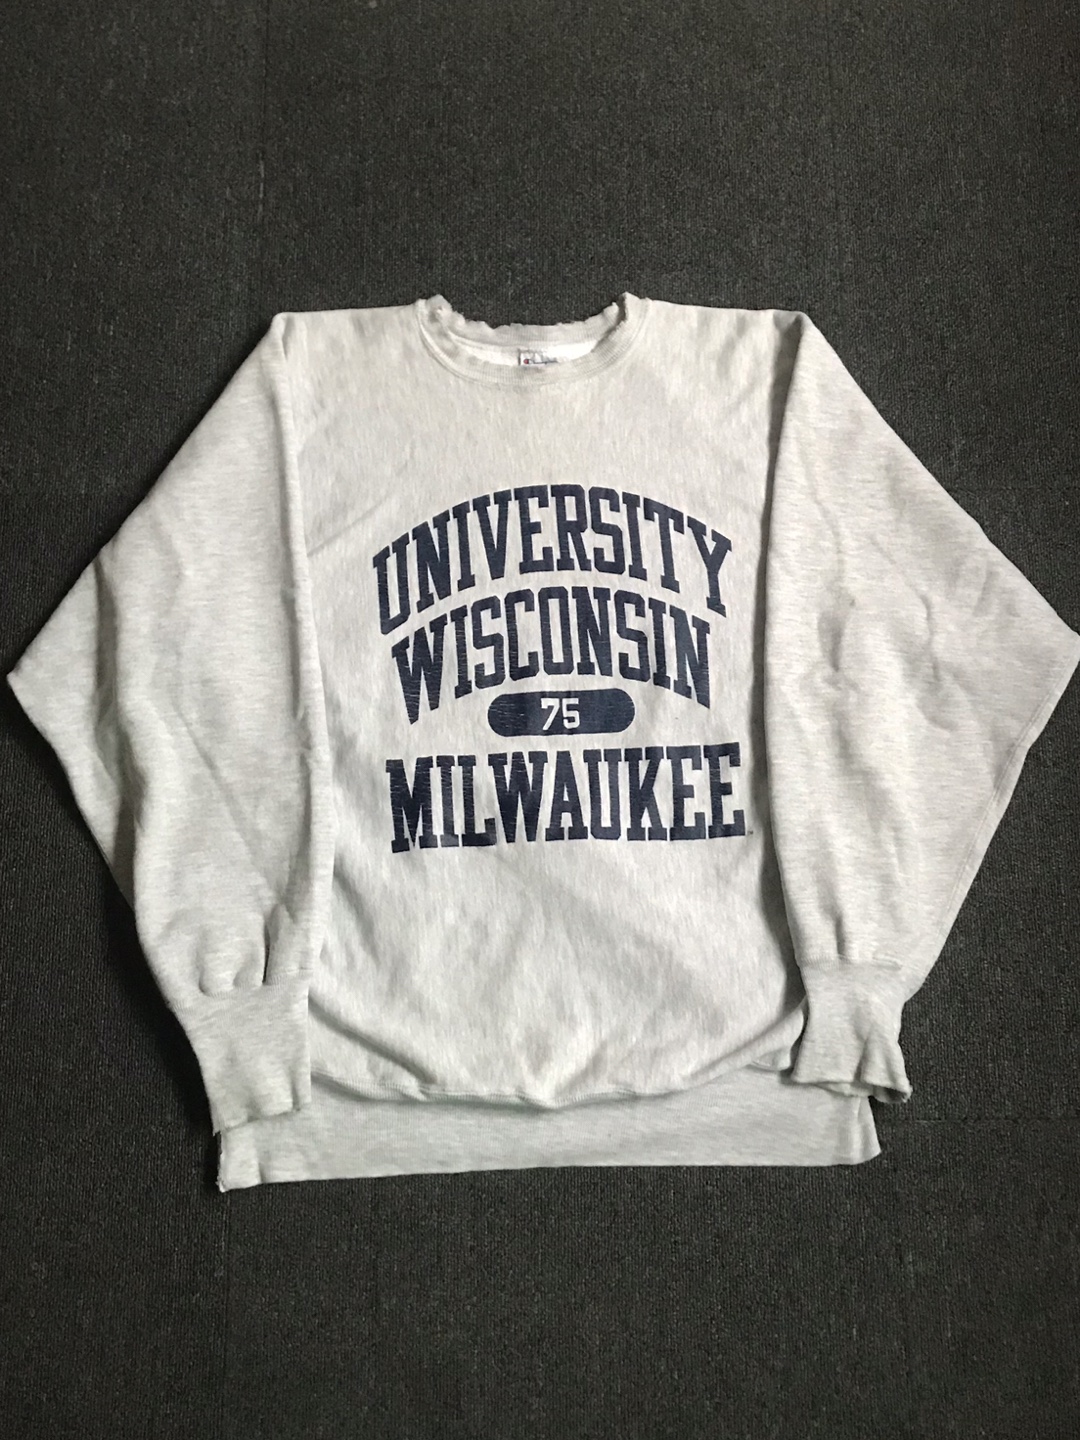 90s champion reverse weave sweatshirt (XL size, ~105 추천)